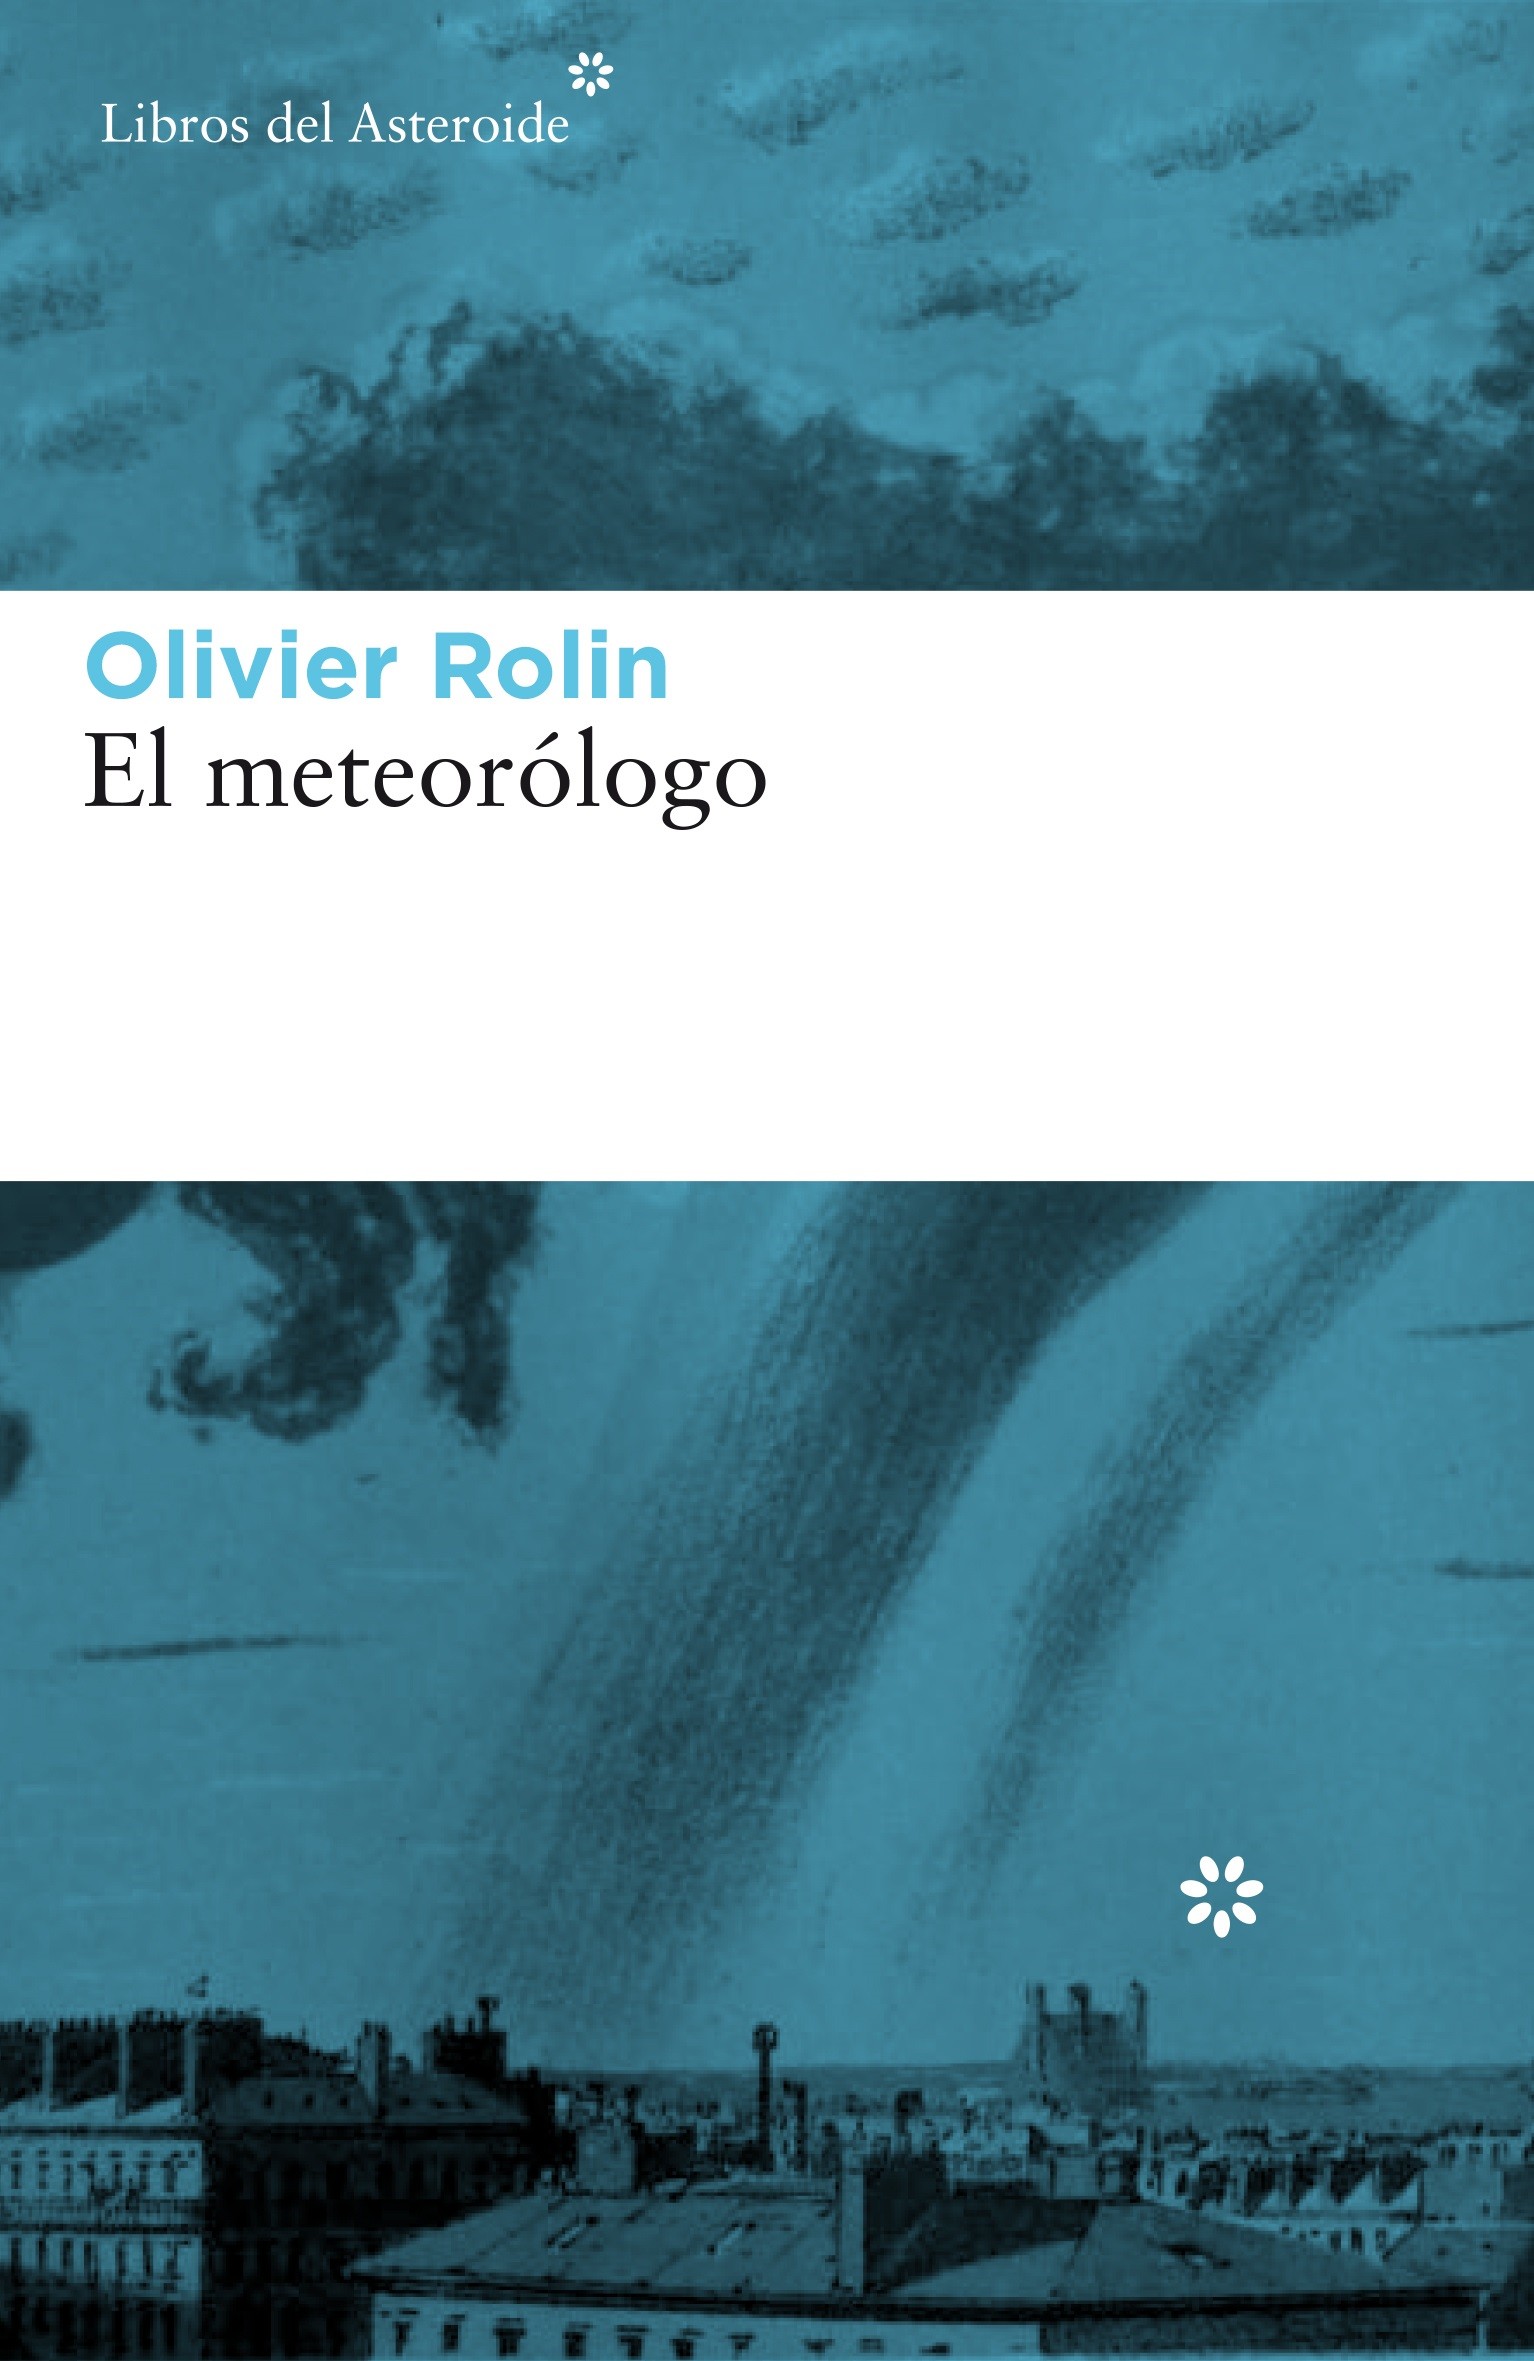 OlivierRolin-meteorologo.jpg